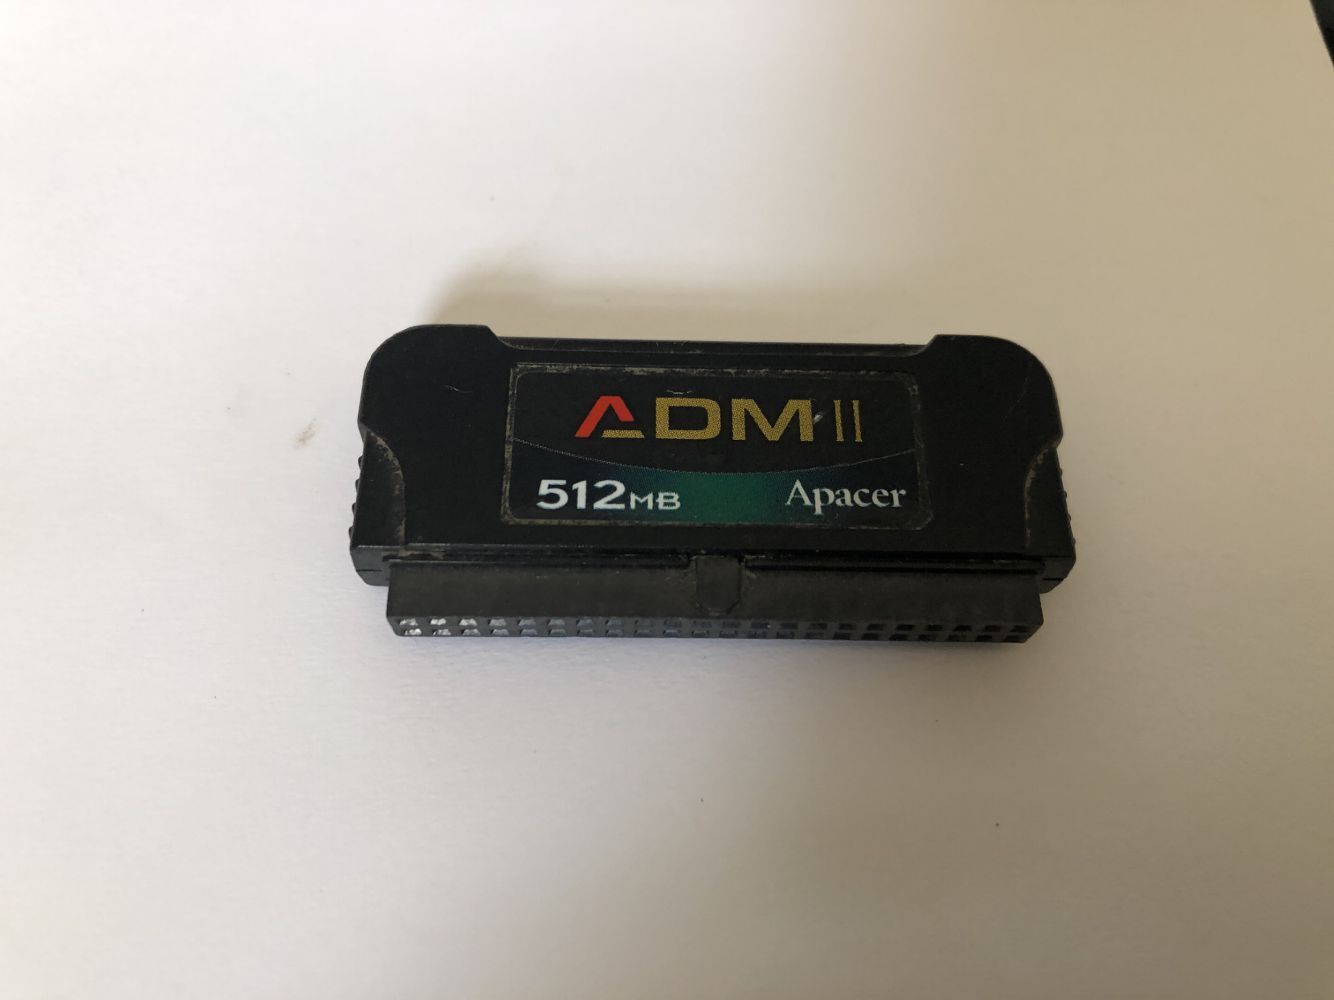 Apacer 512MB 44Pin ADM II DOM Disk On Module 44PIN